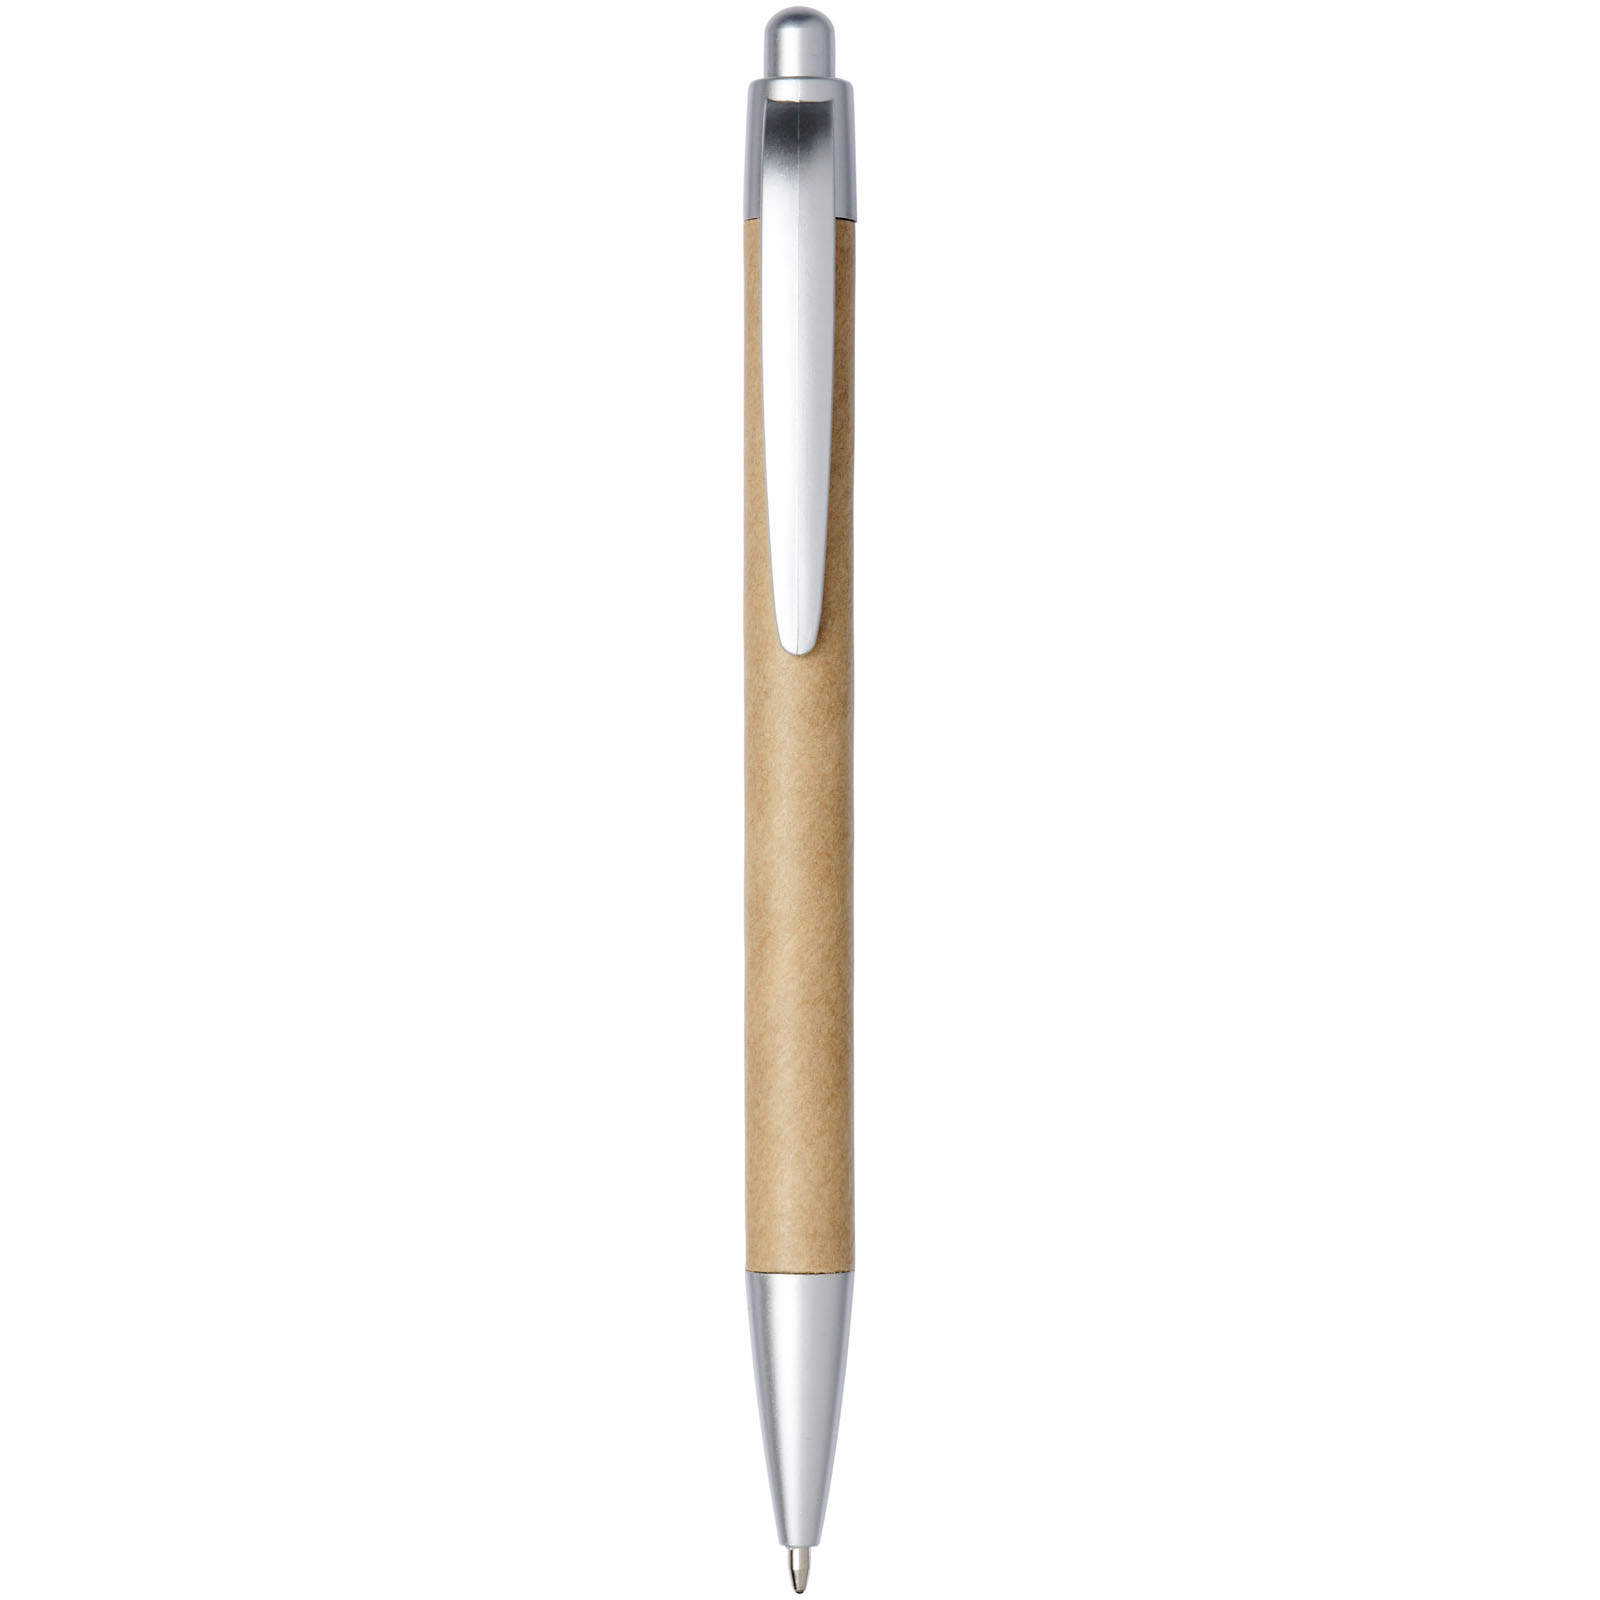 Advertising Ballpoint Pens - Tiflet recycled paper ballpoint pen